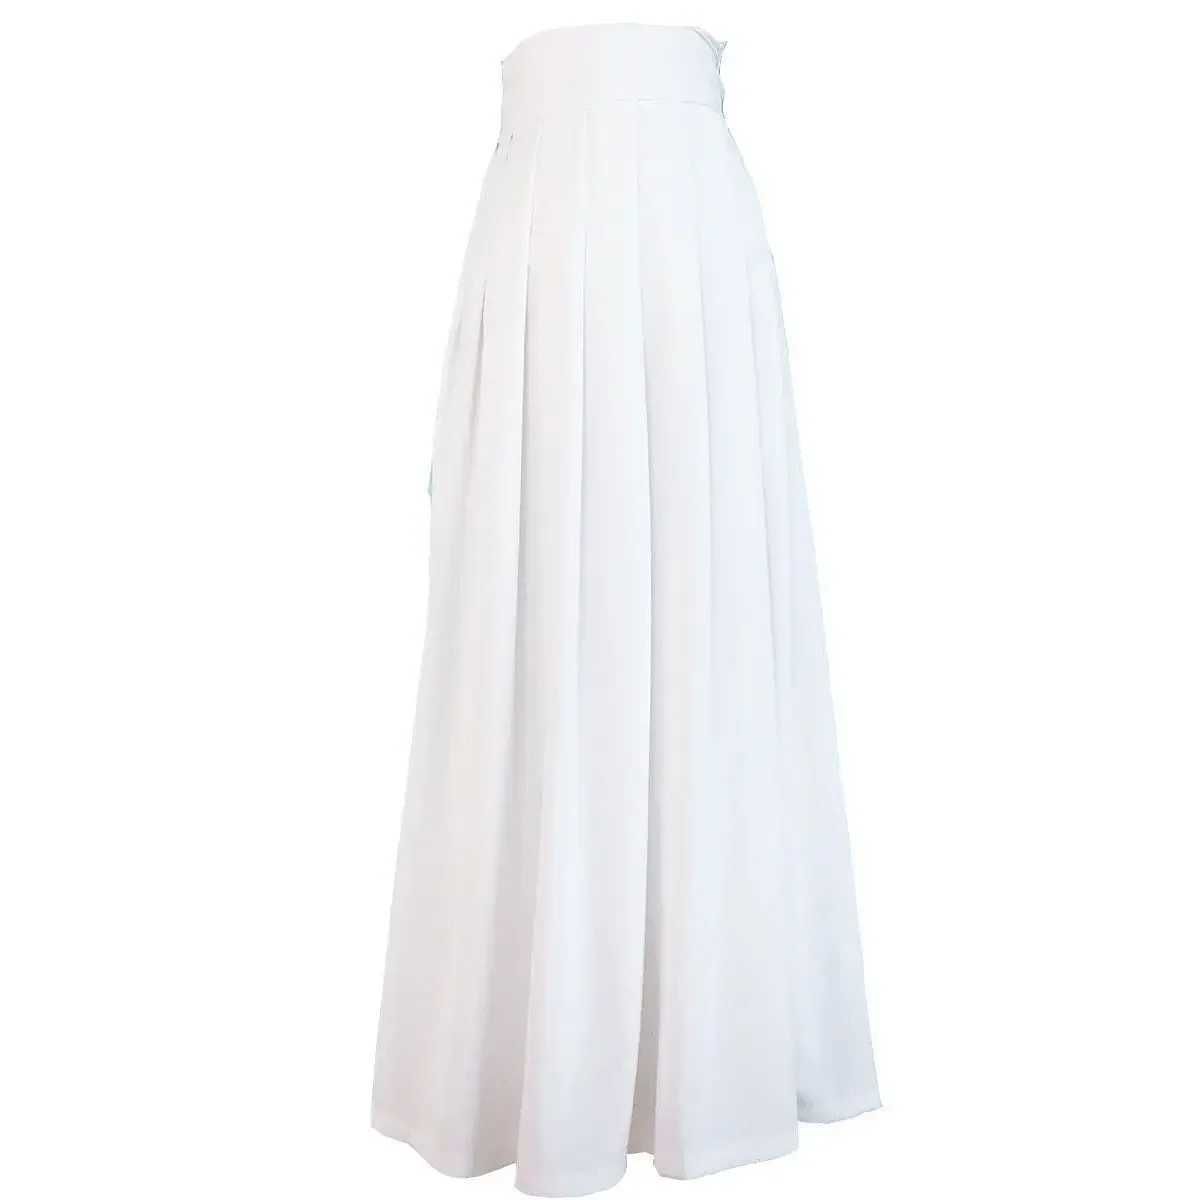 a White Skirt-160-165cm(63-65inch)